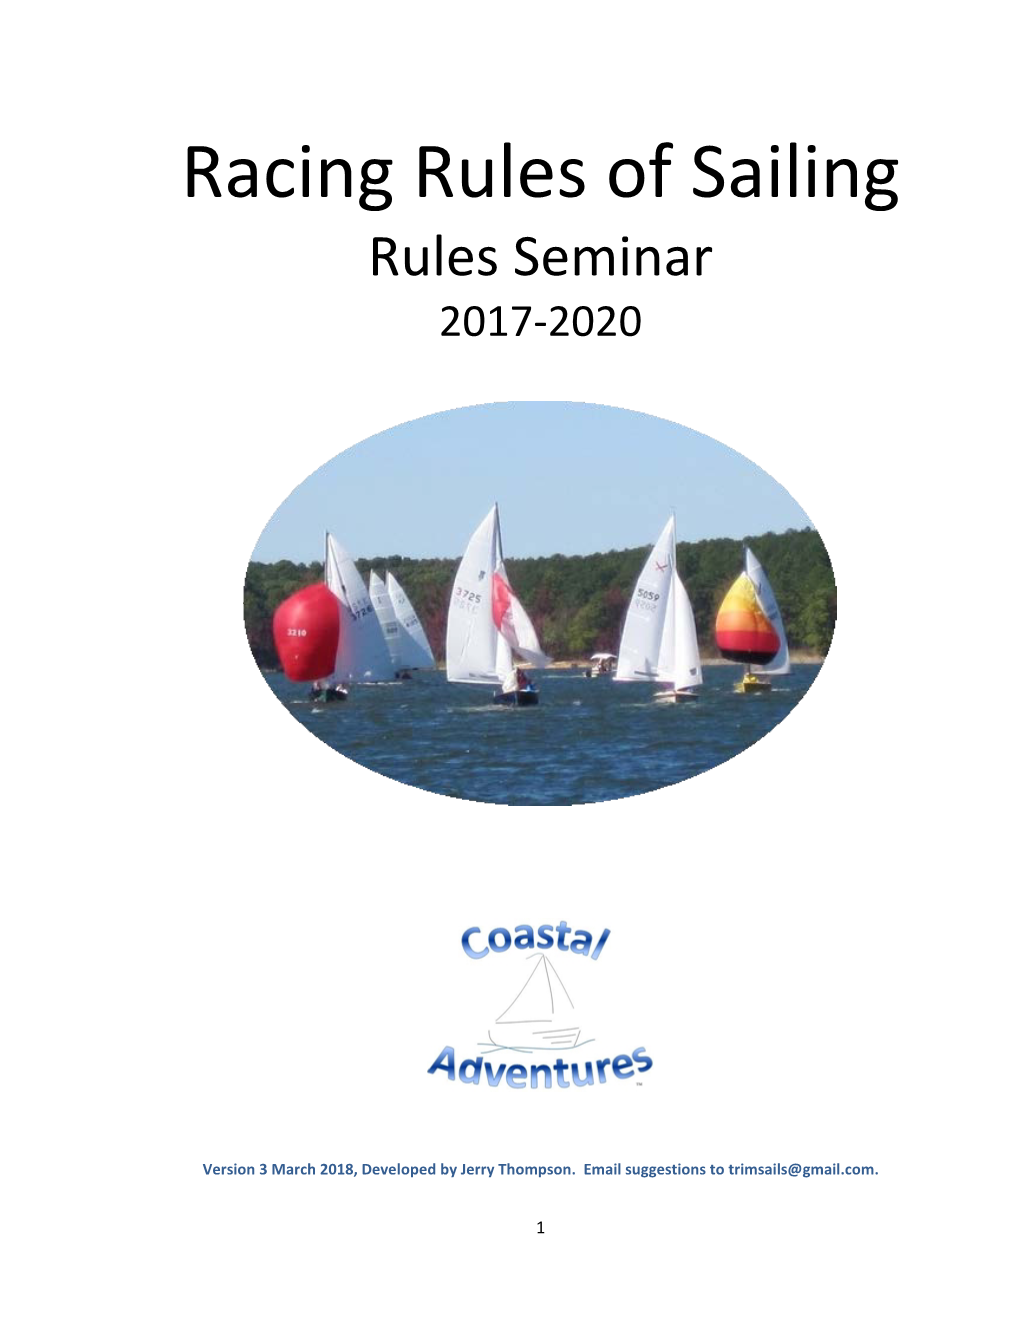 Racing Rules of Sailing Rules Seminar 2017-2020